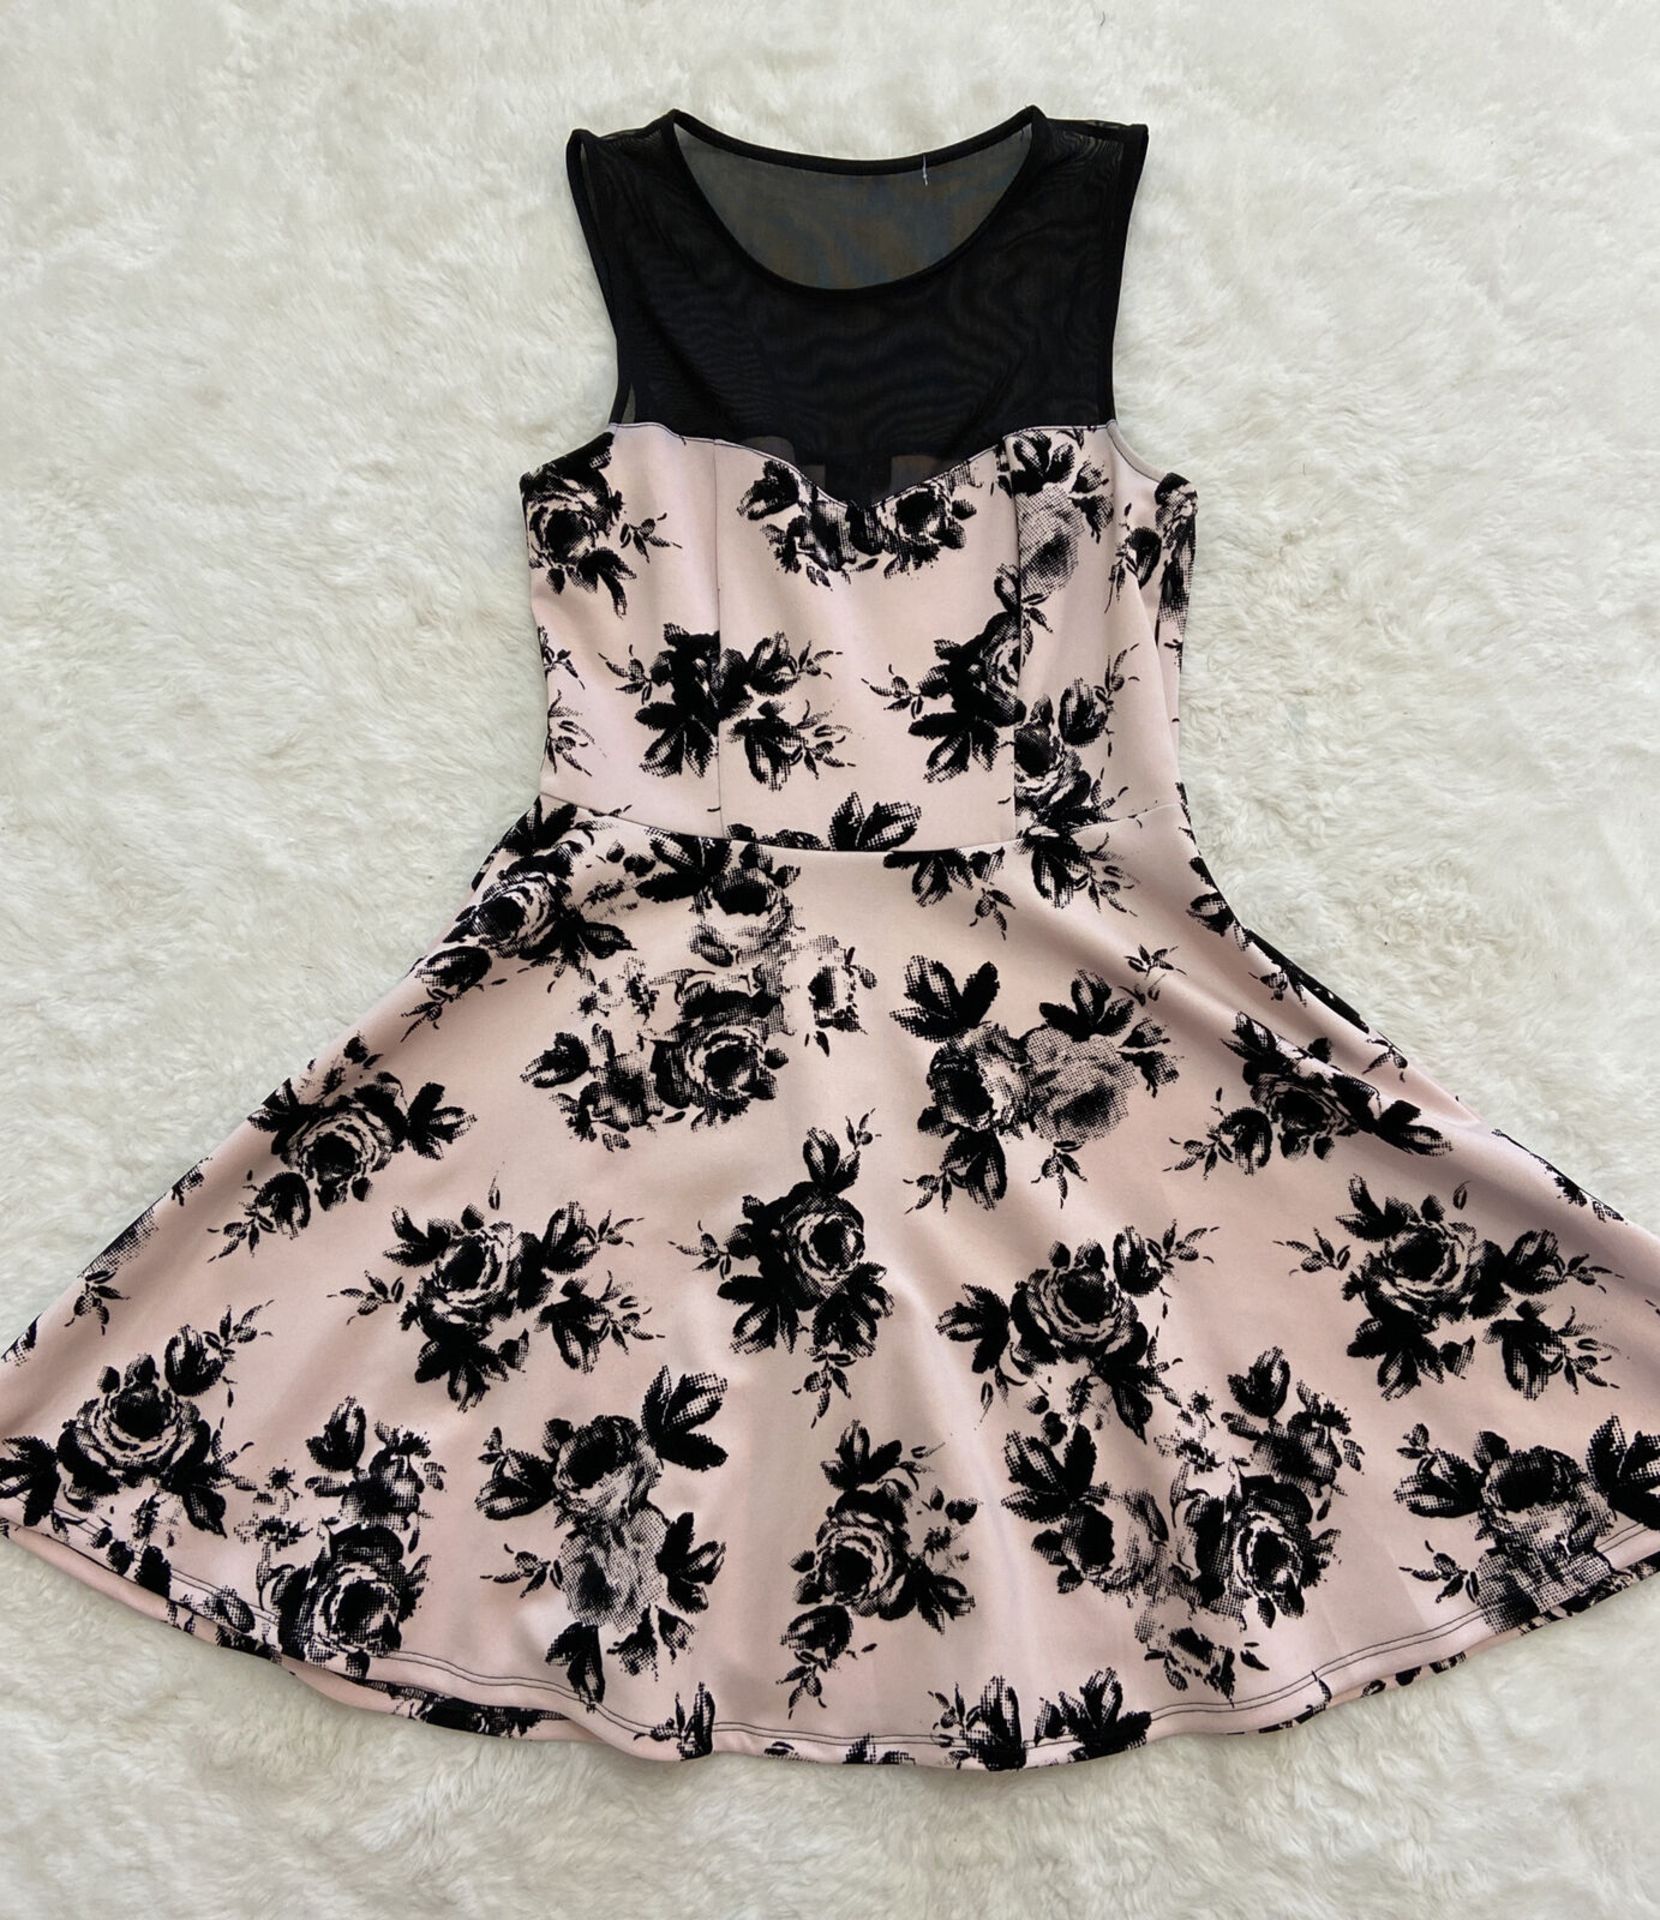 Trixxi I Flocked Illusion Fit & Flare Pink/Black Dress Size Medium Floral - Image 2 of 4